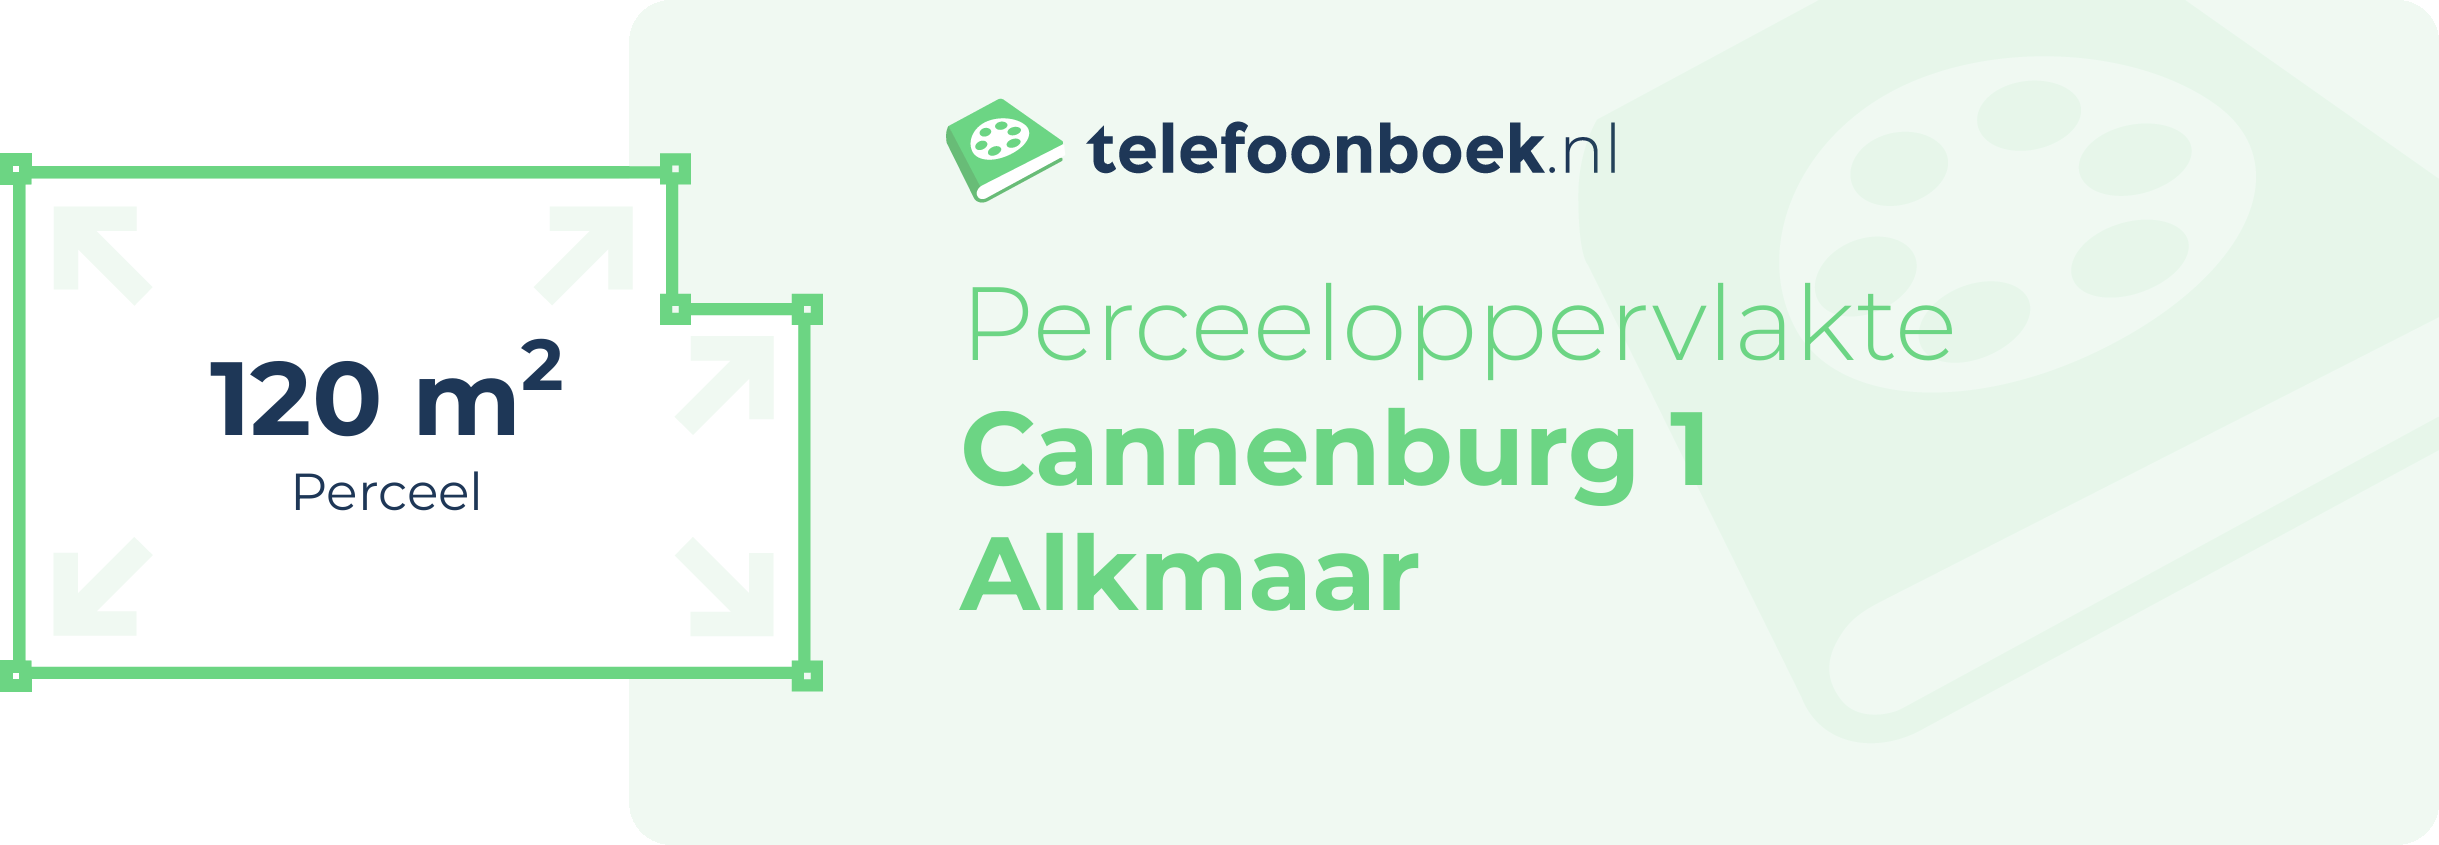 Perceeloppervlakte Cannenburg 1 Alkmaar